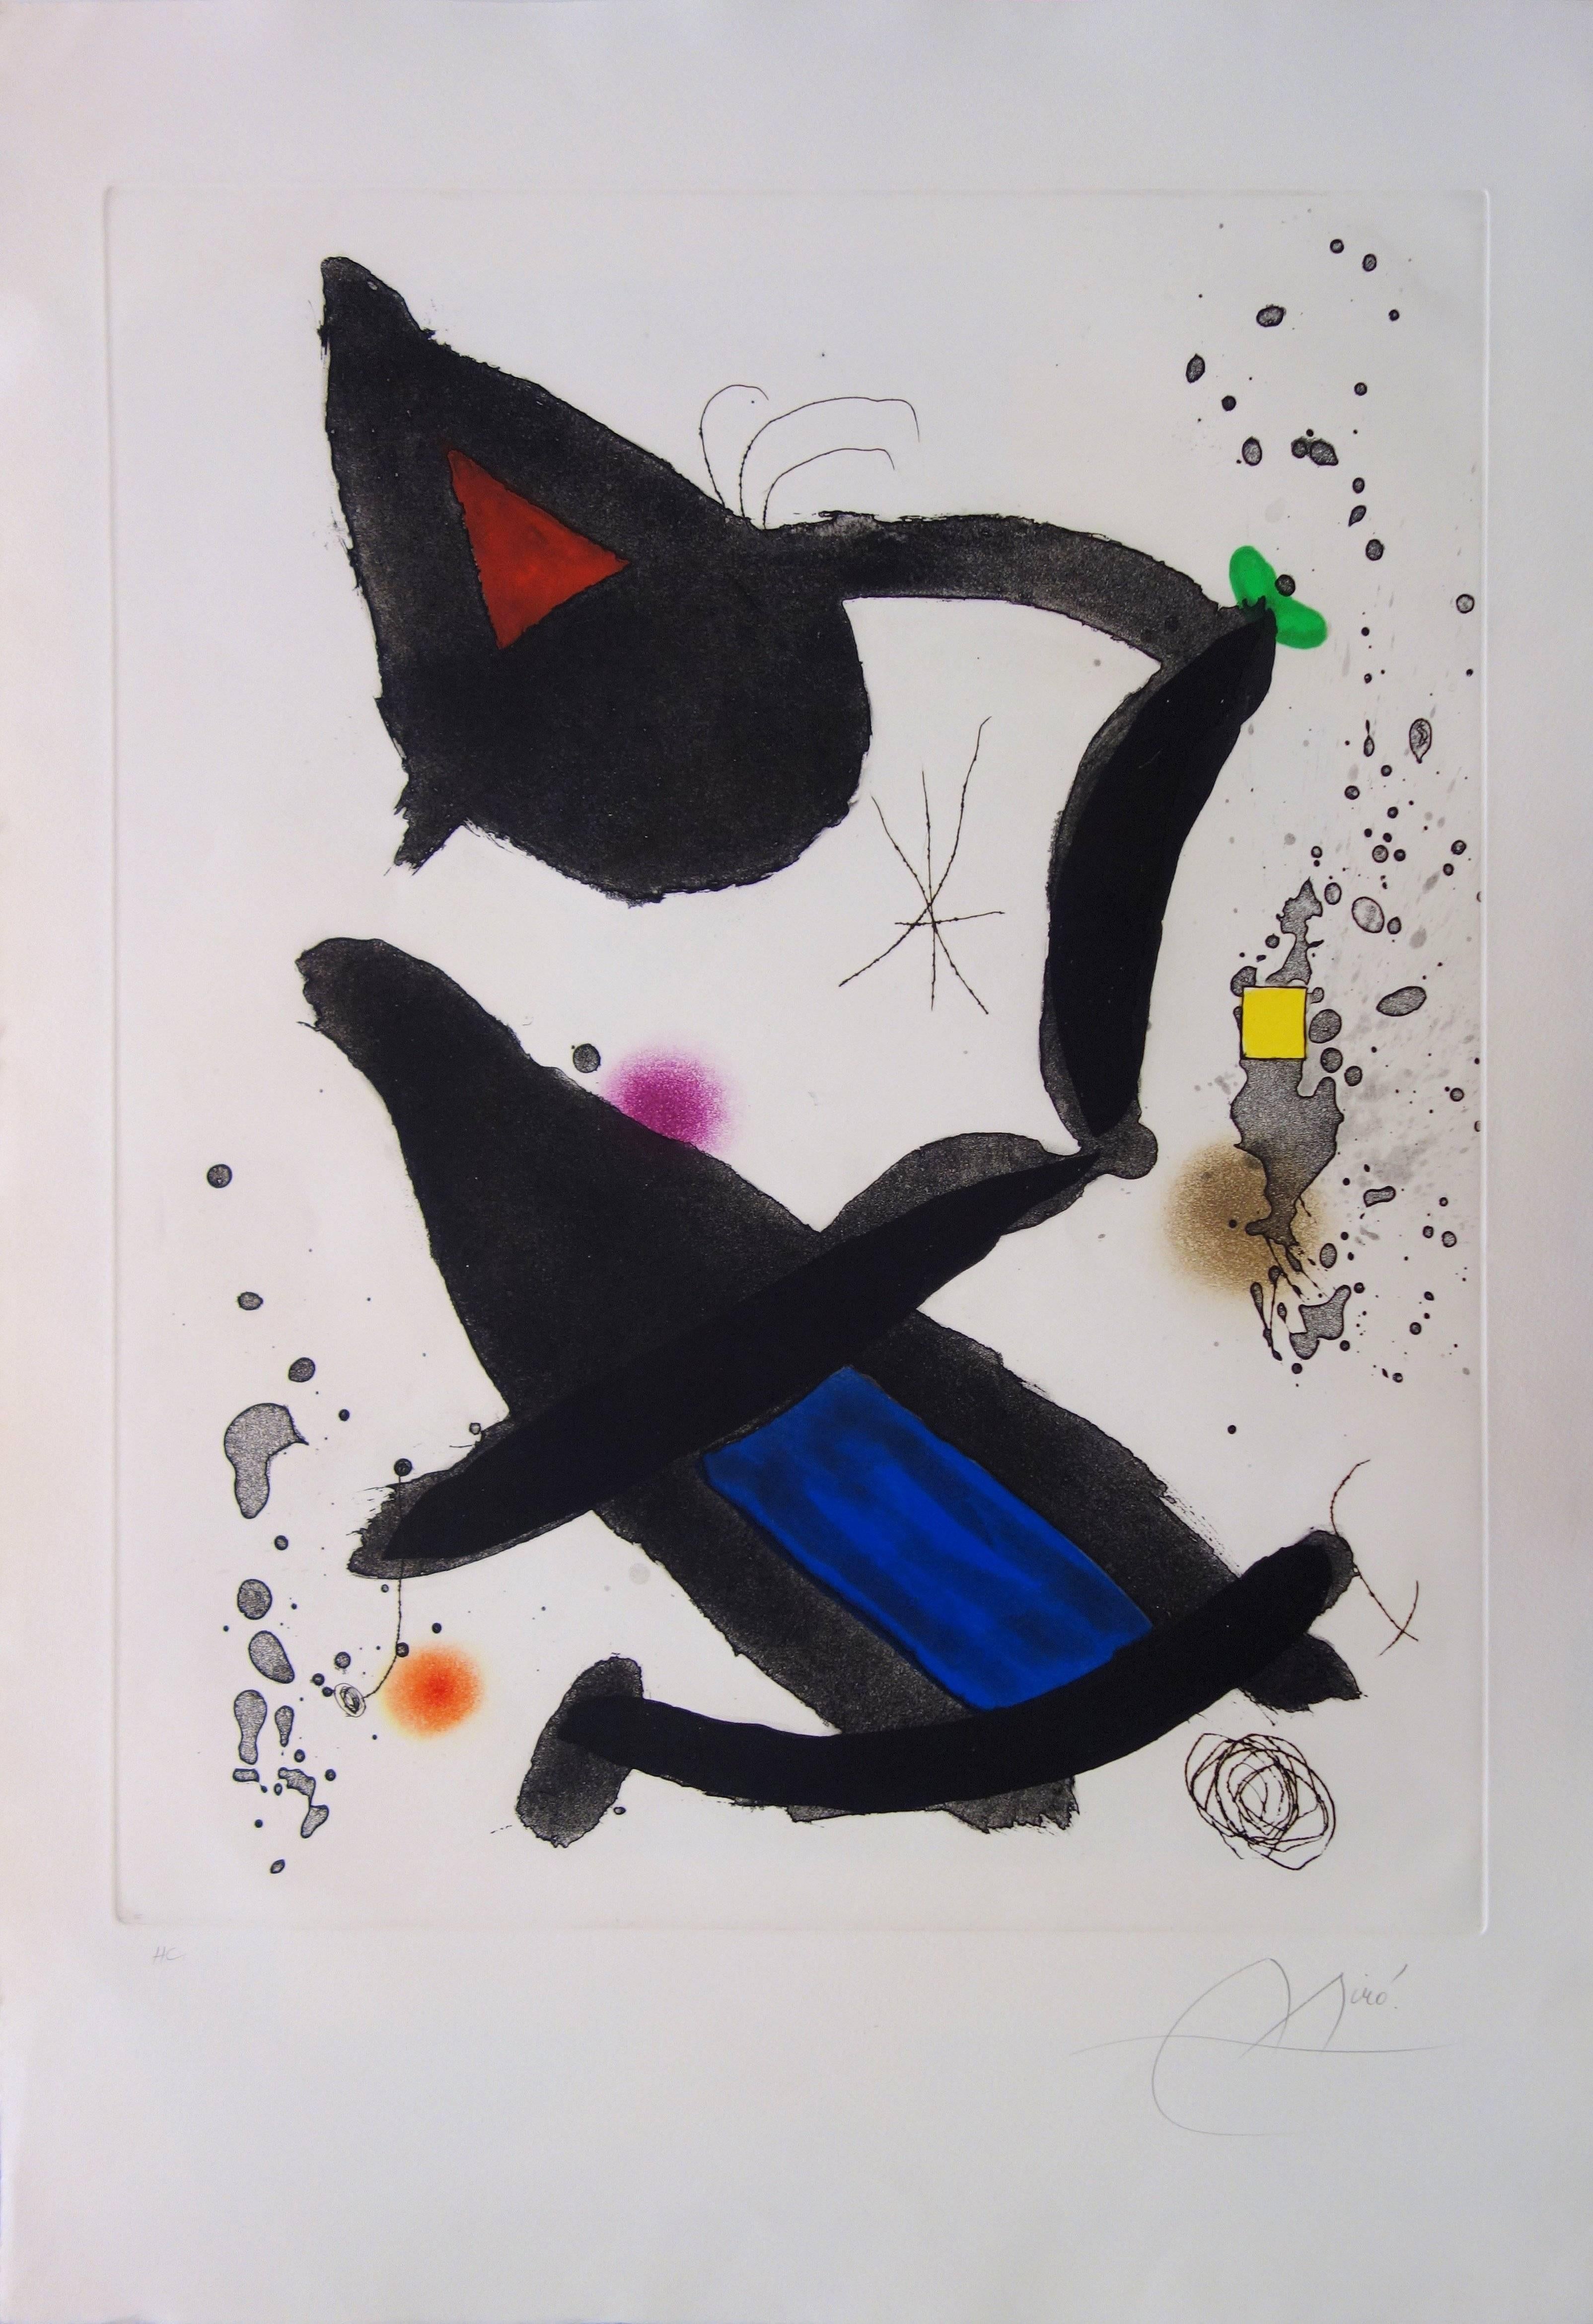 Joan Miró Abstract Print - King David - Original handsigned etching and aquatint, 1972